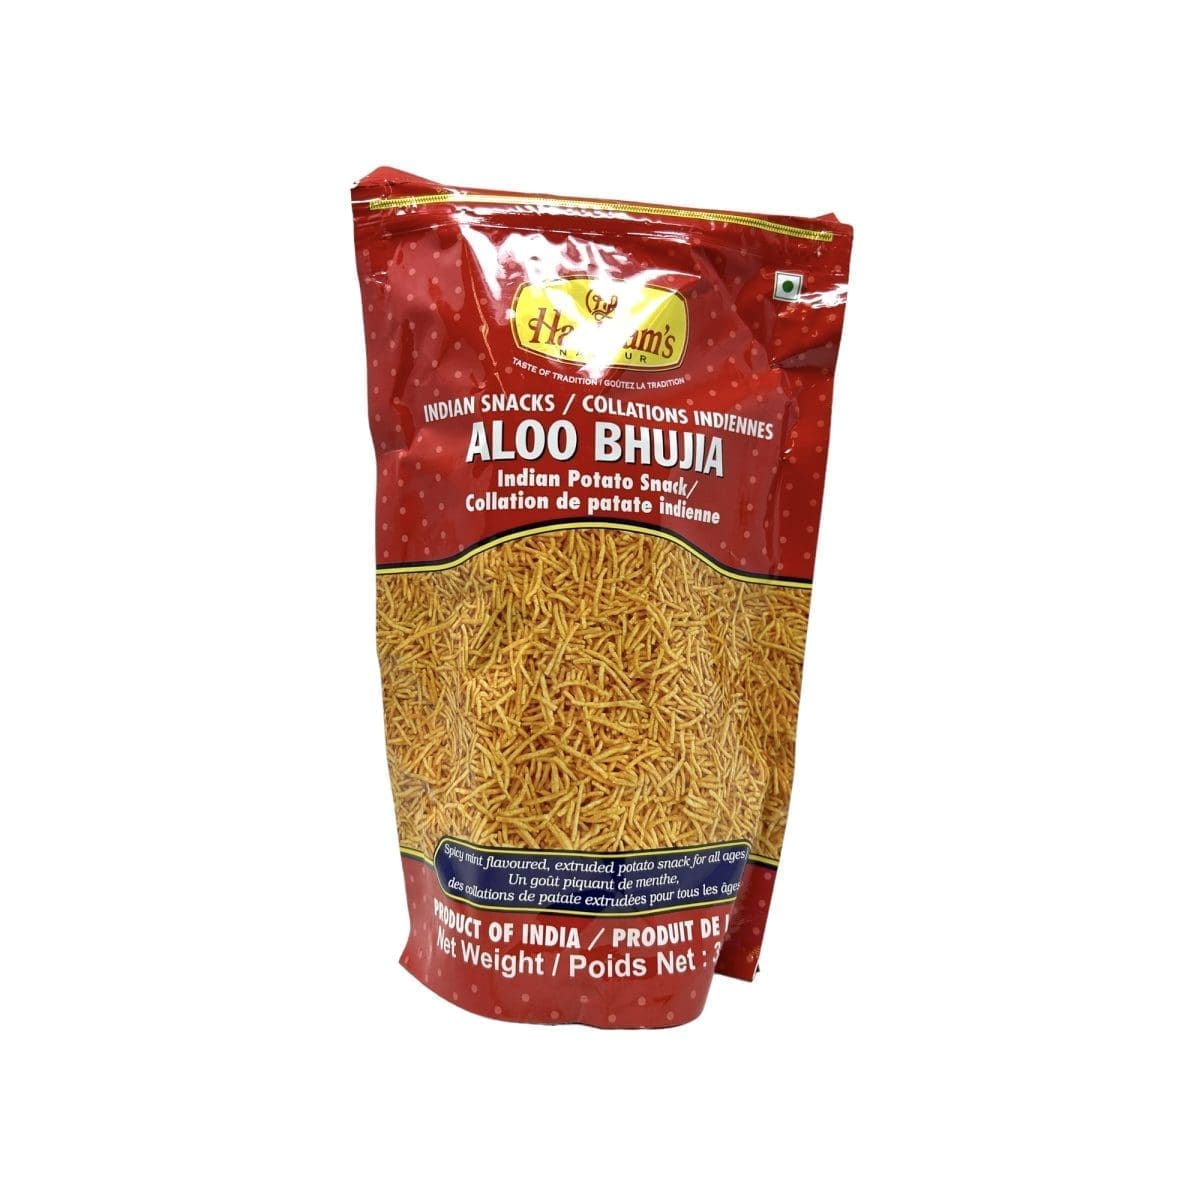 Haldiram’s Indian Snacks Aloo Bhujia Potato Snack (350g)